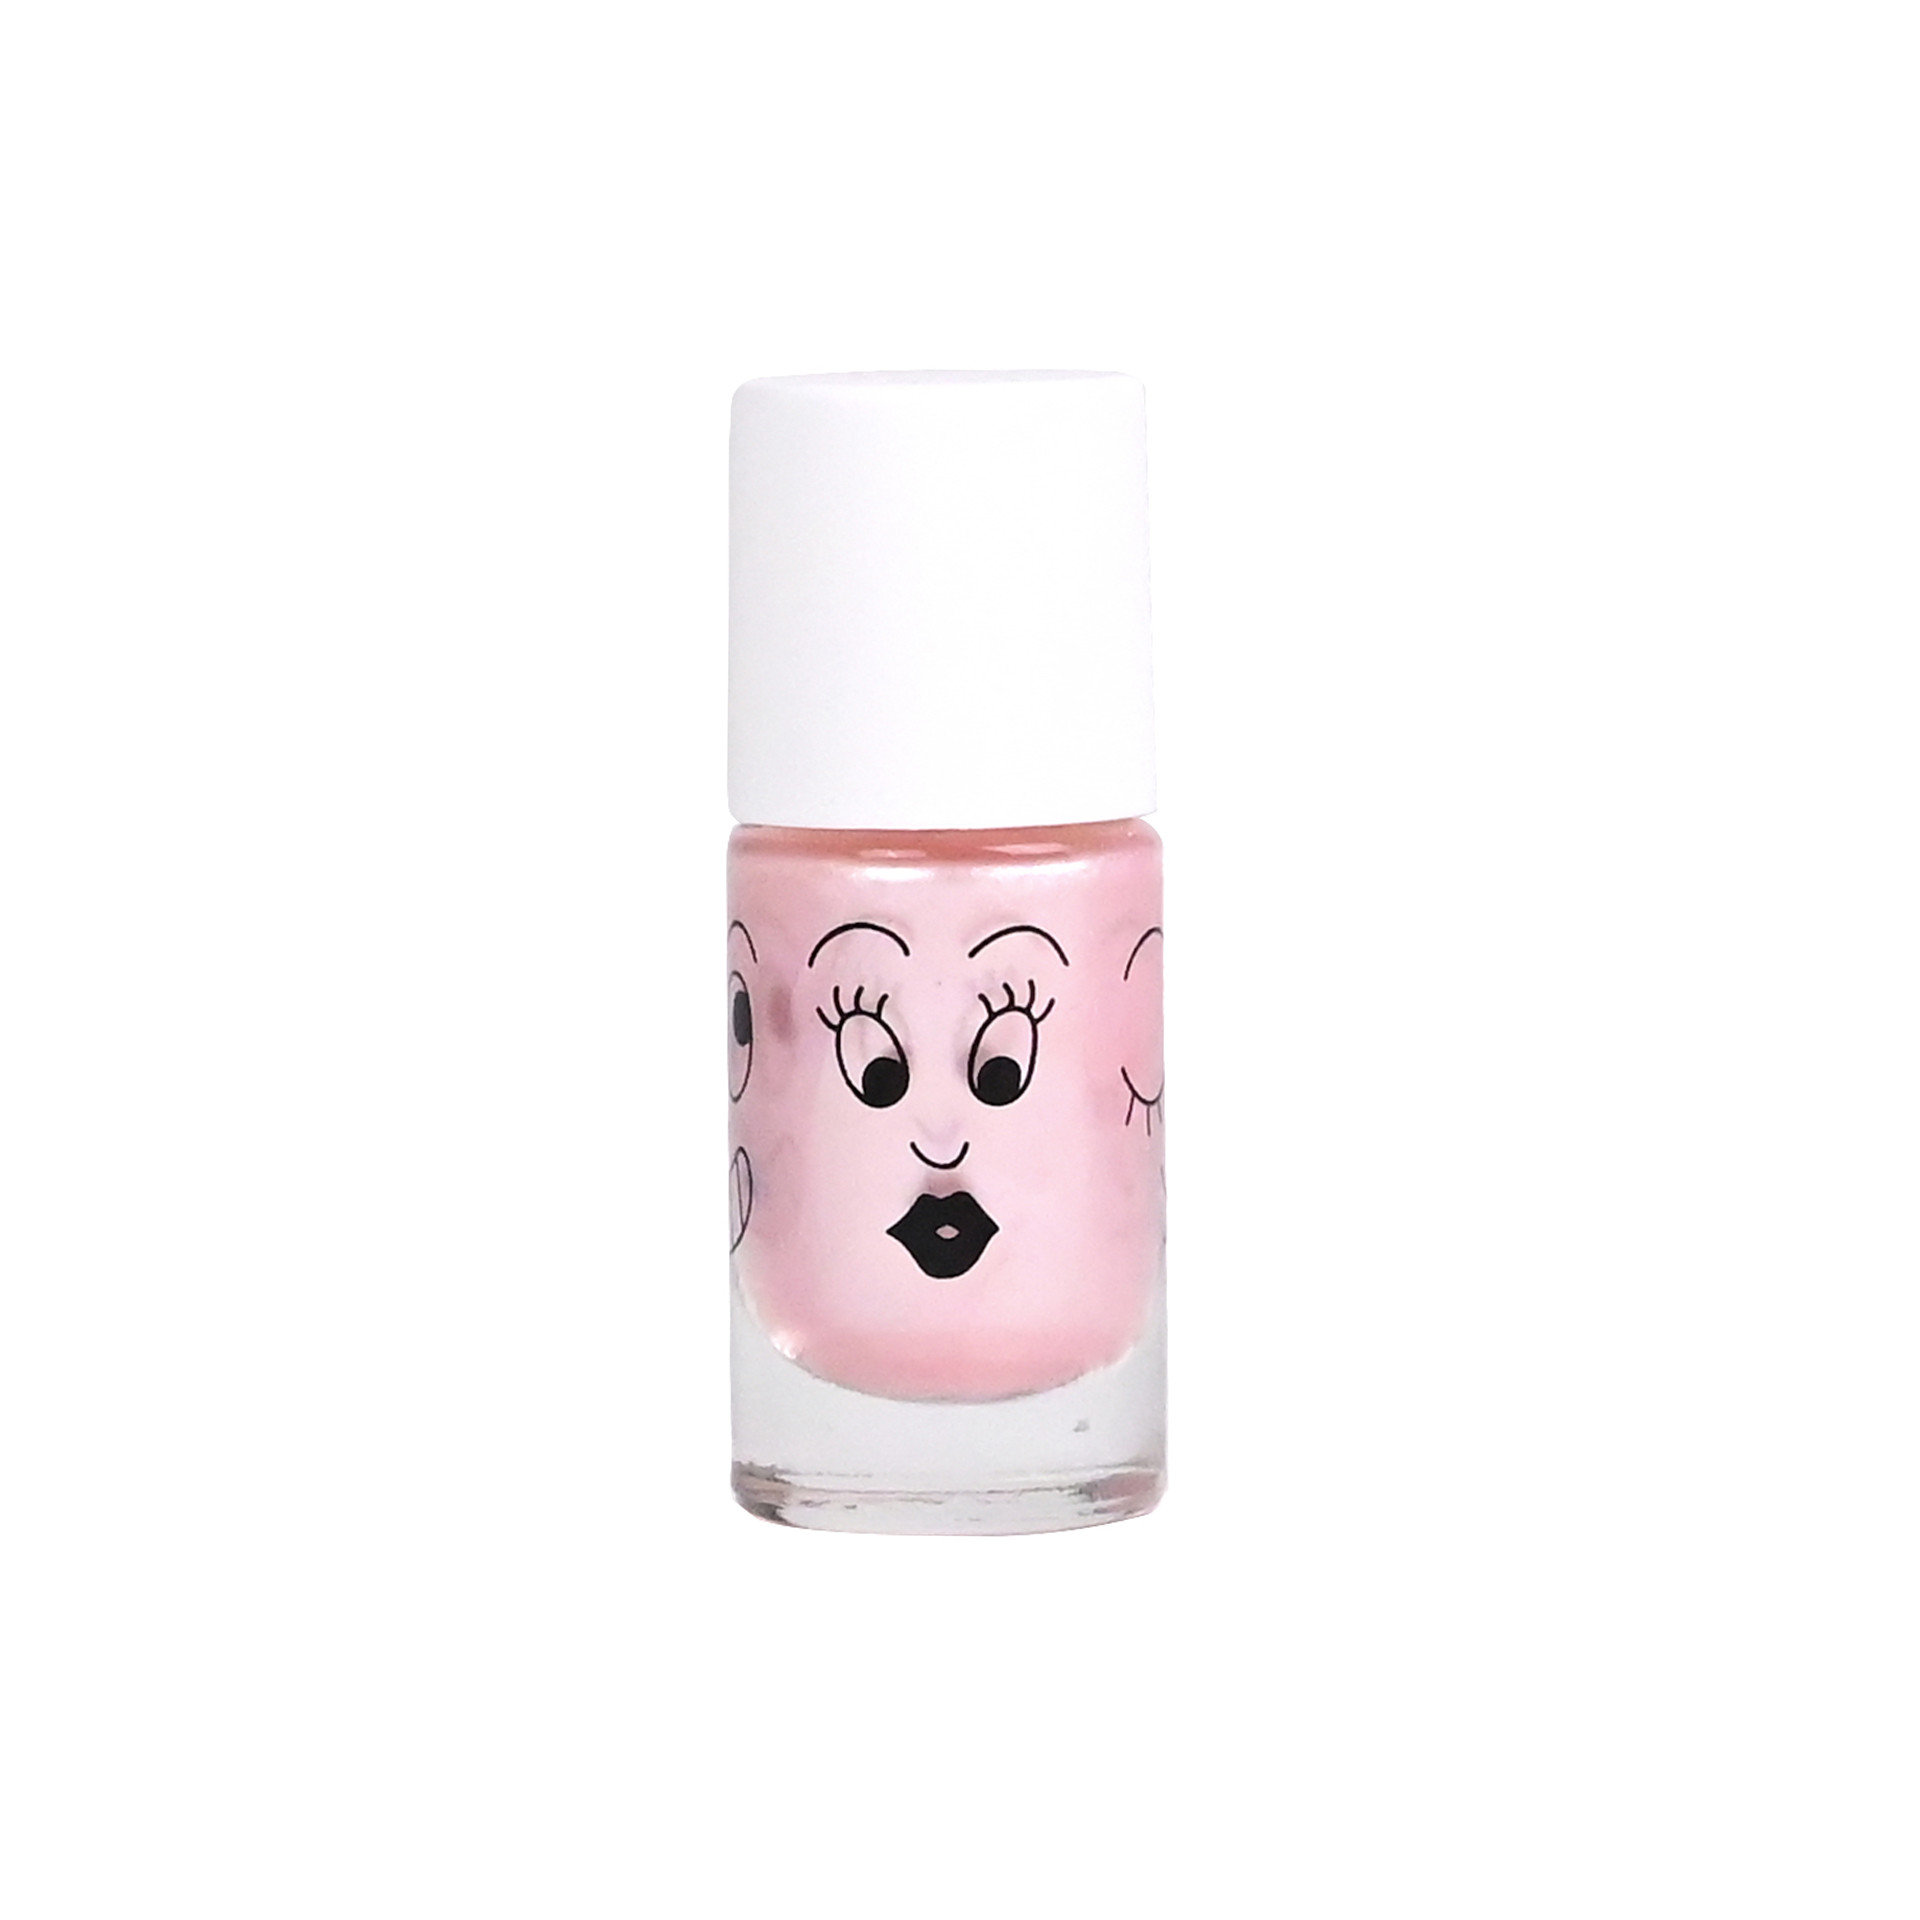 Daisy – pearl pink polish